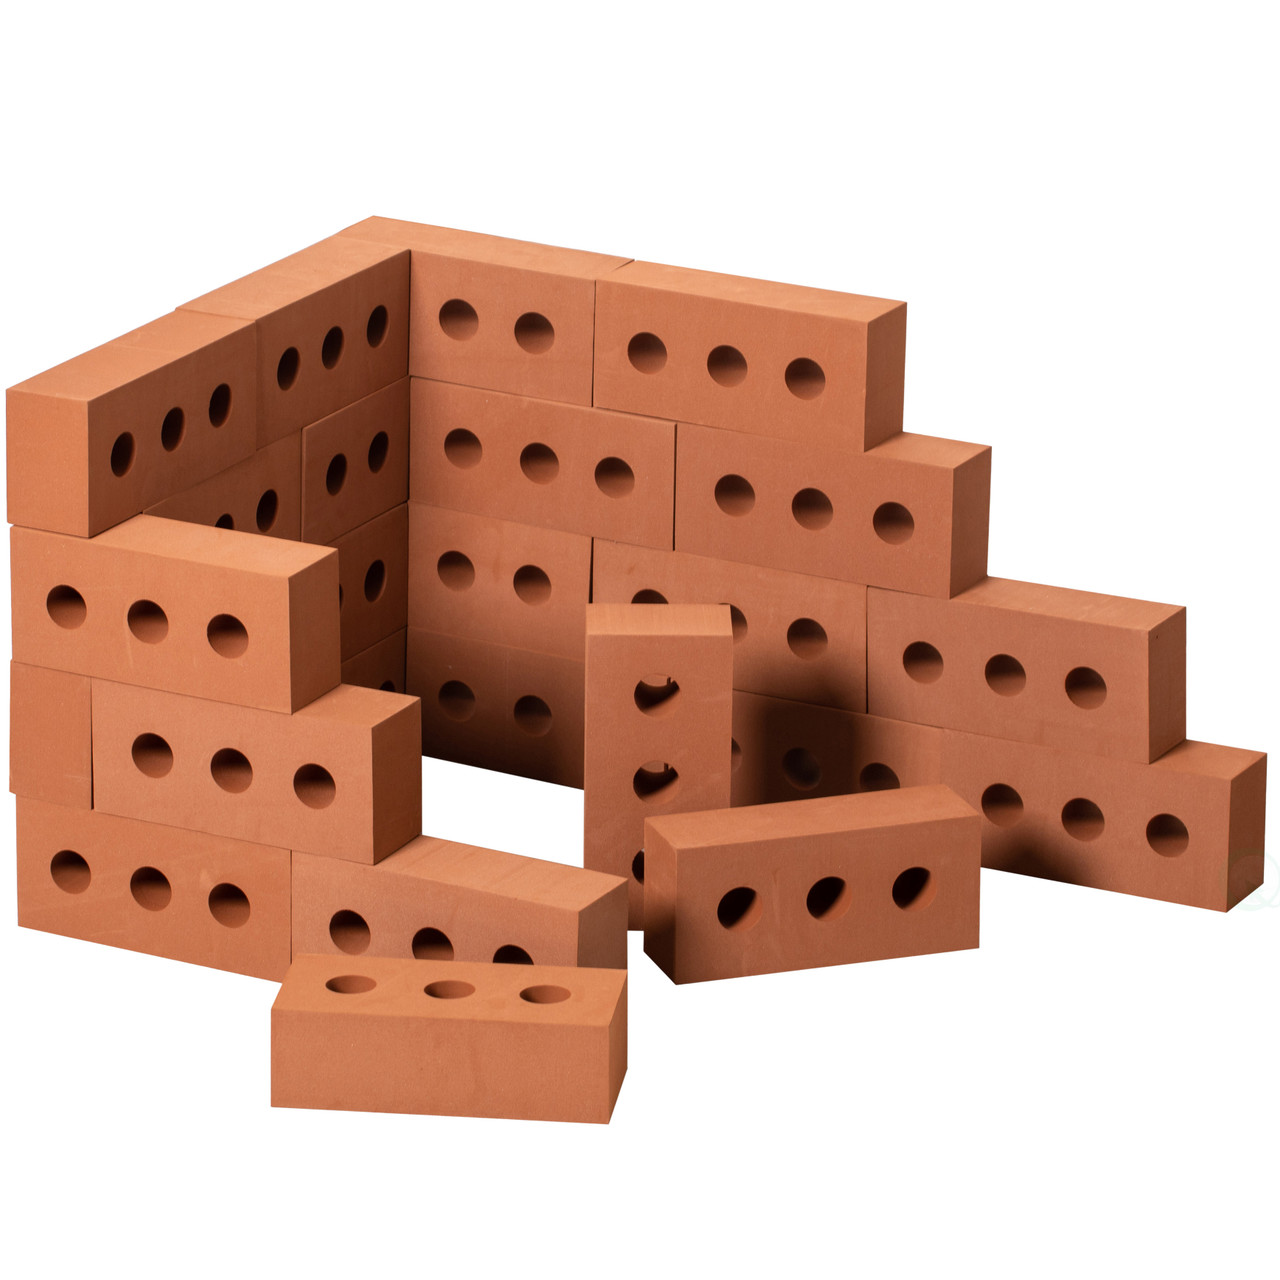 Pink Brick Box – Creative Brick Builders